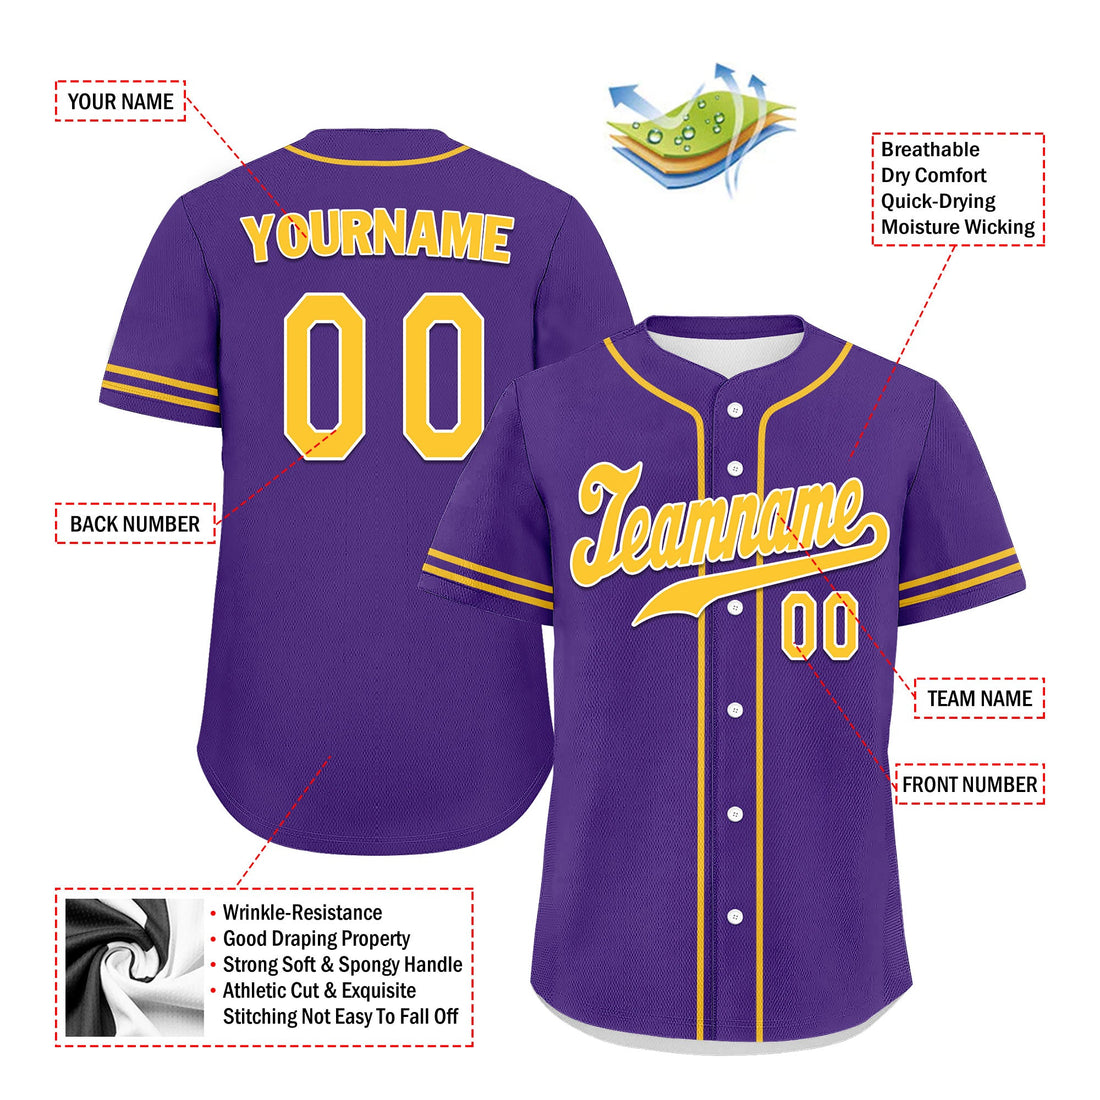 Custom Purple Classic Style Yellow Personalized Authentic Baseball Jersey UN002-bd0b00d8-bb